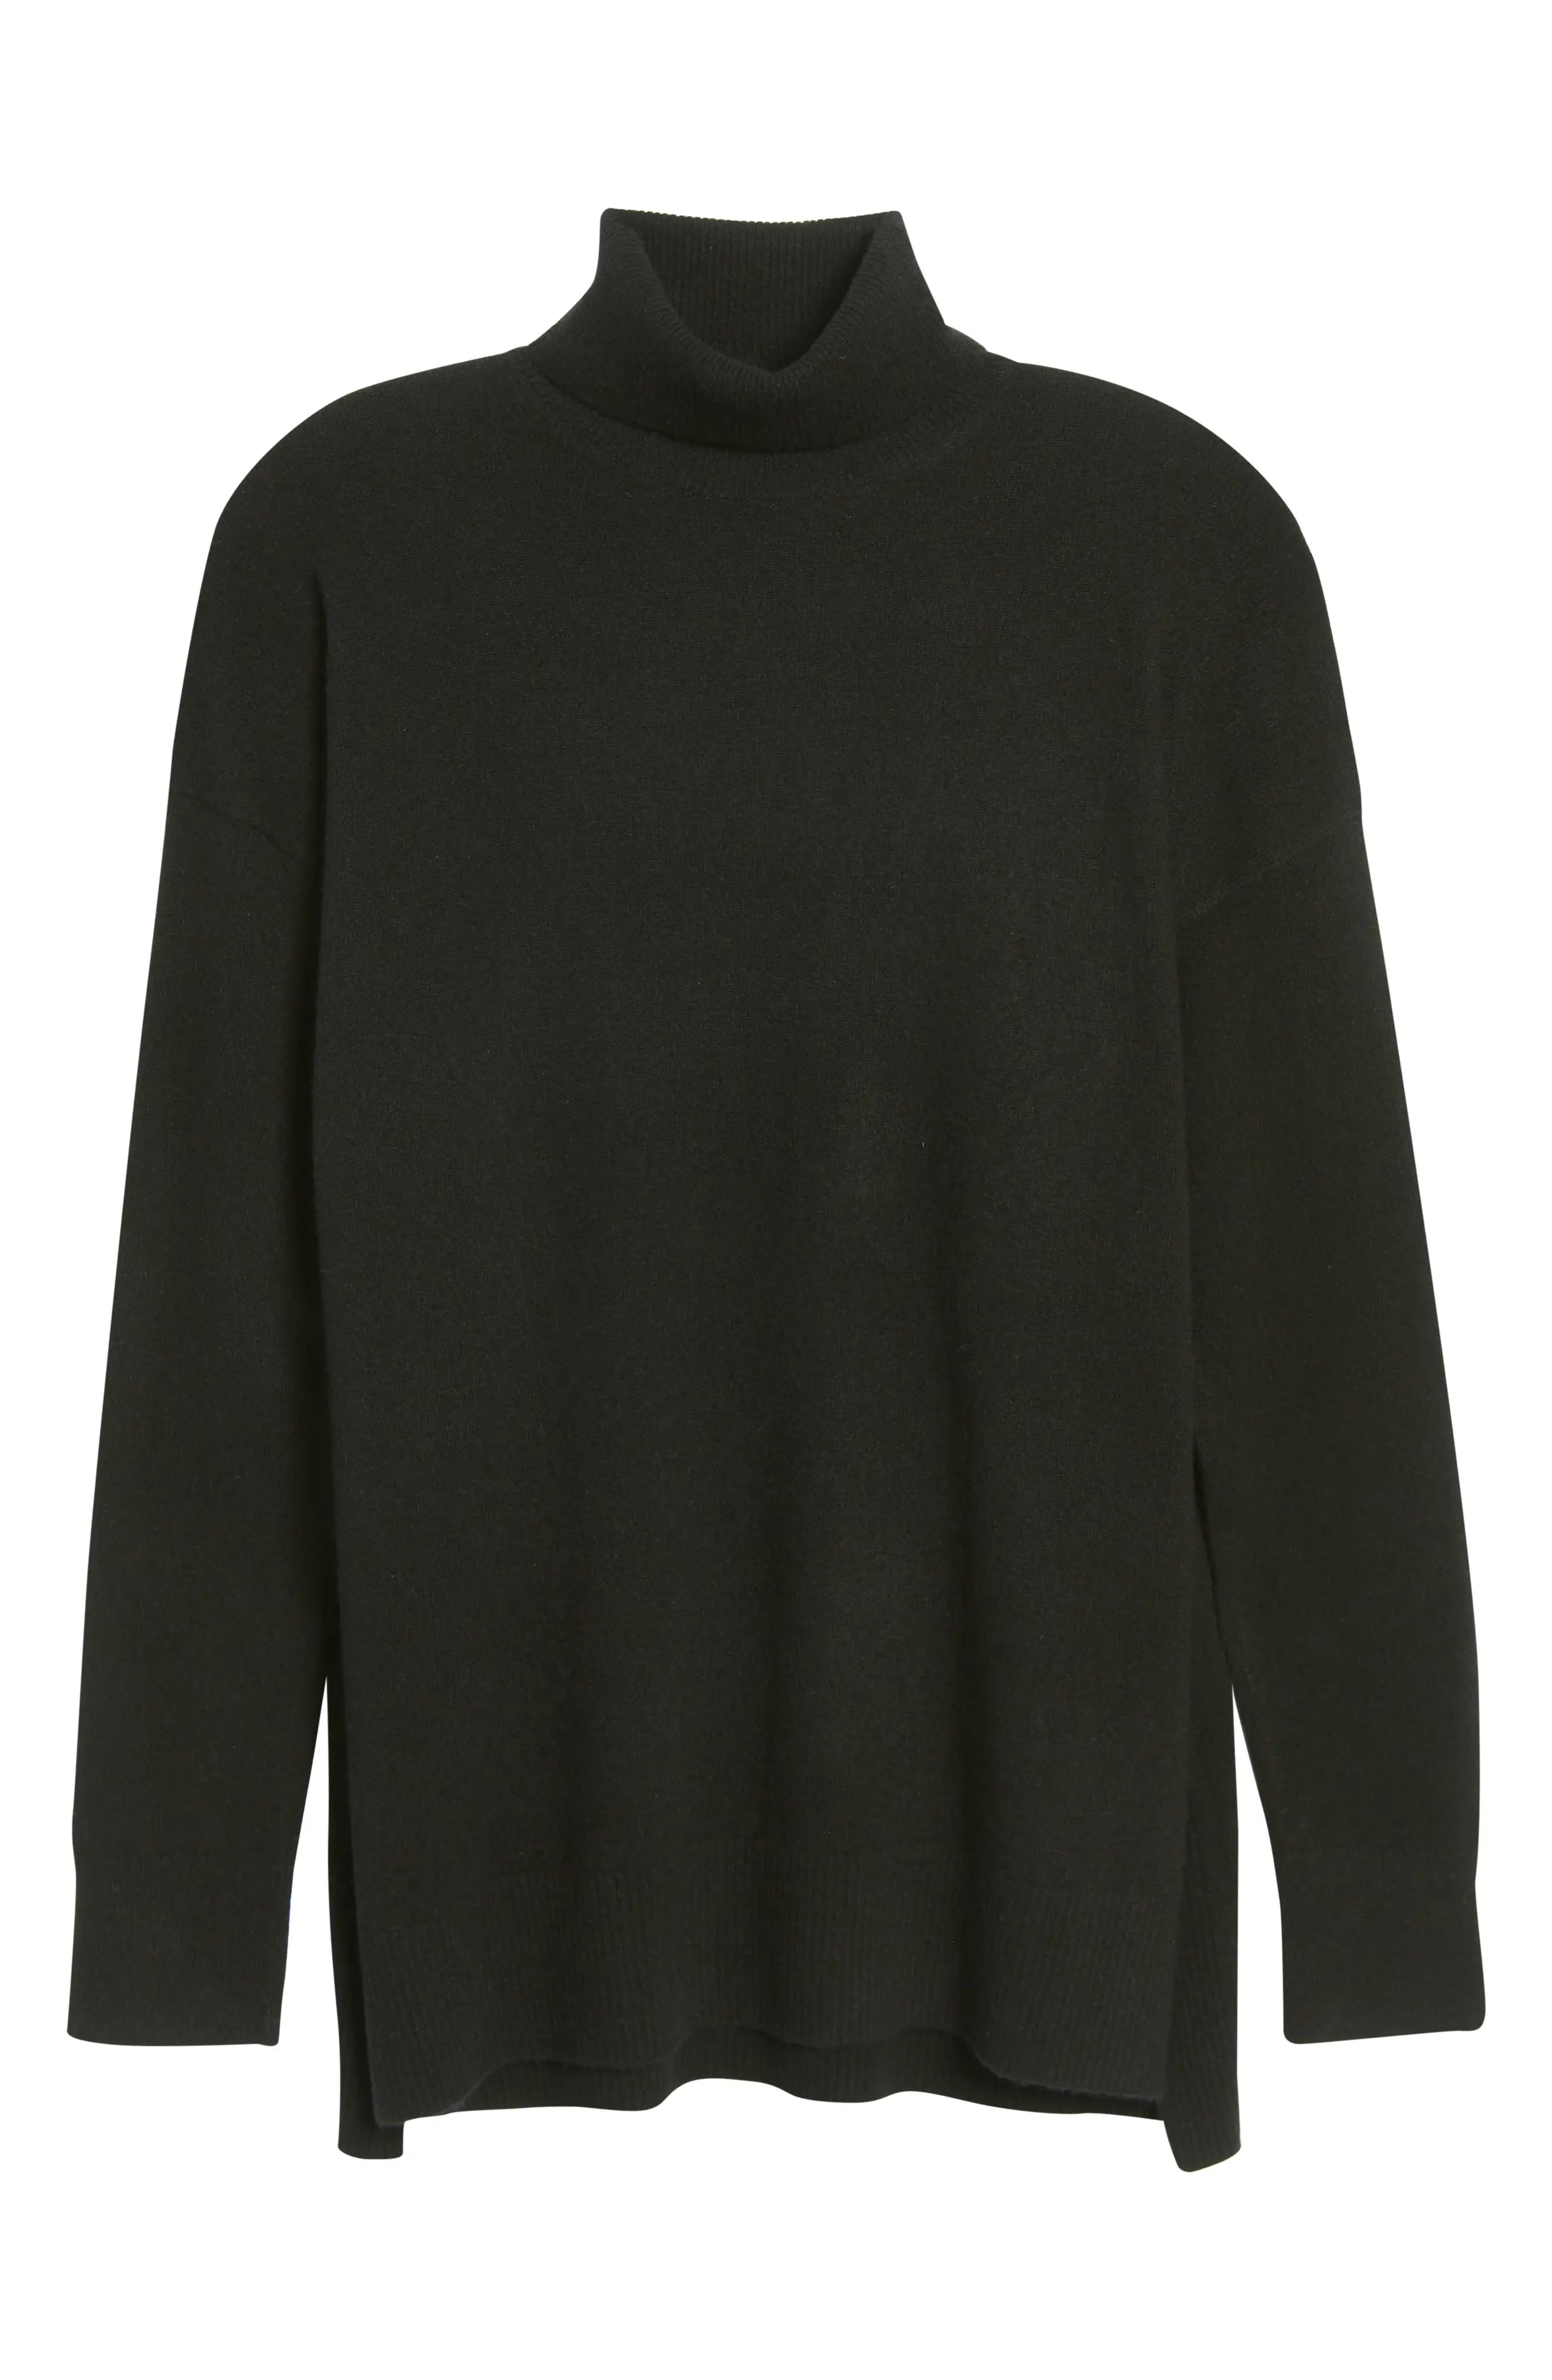 AllSaints Gala Cashmere Turtleneck Sweater, Size Medium in Black at Nordstrom | Nordstrom